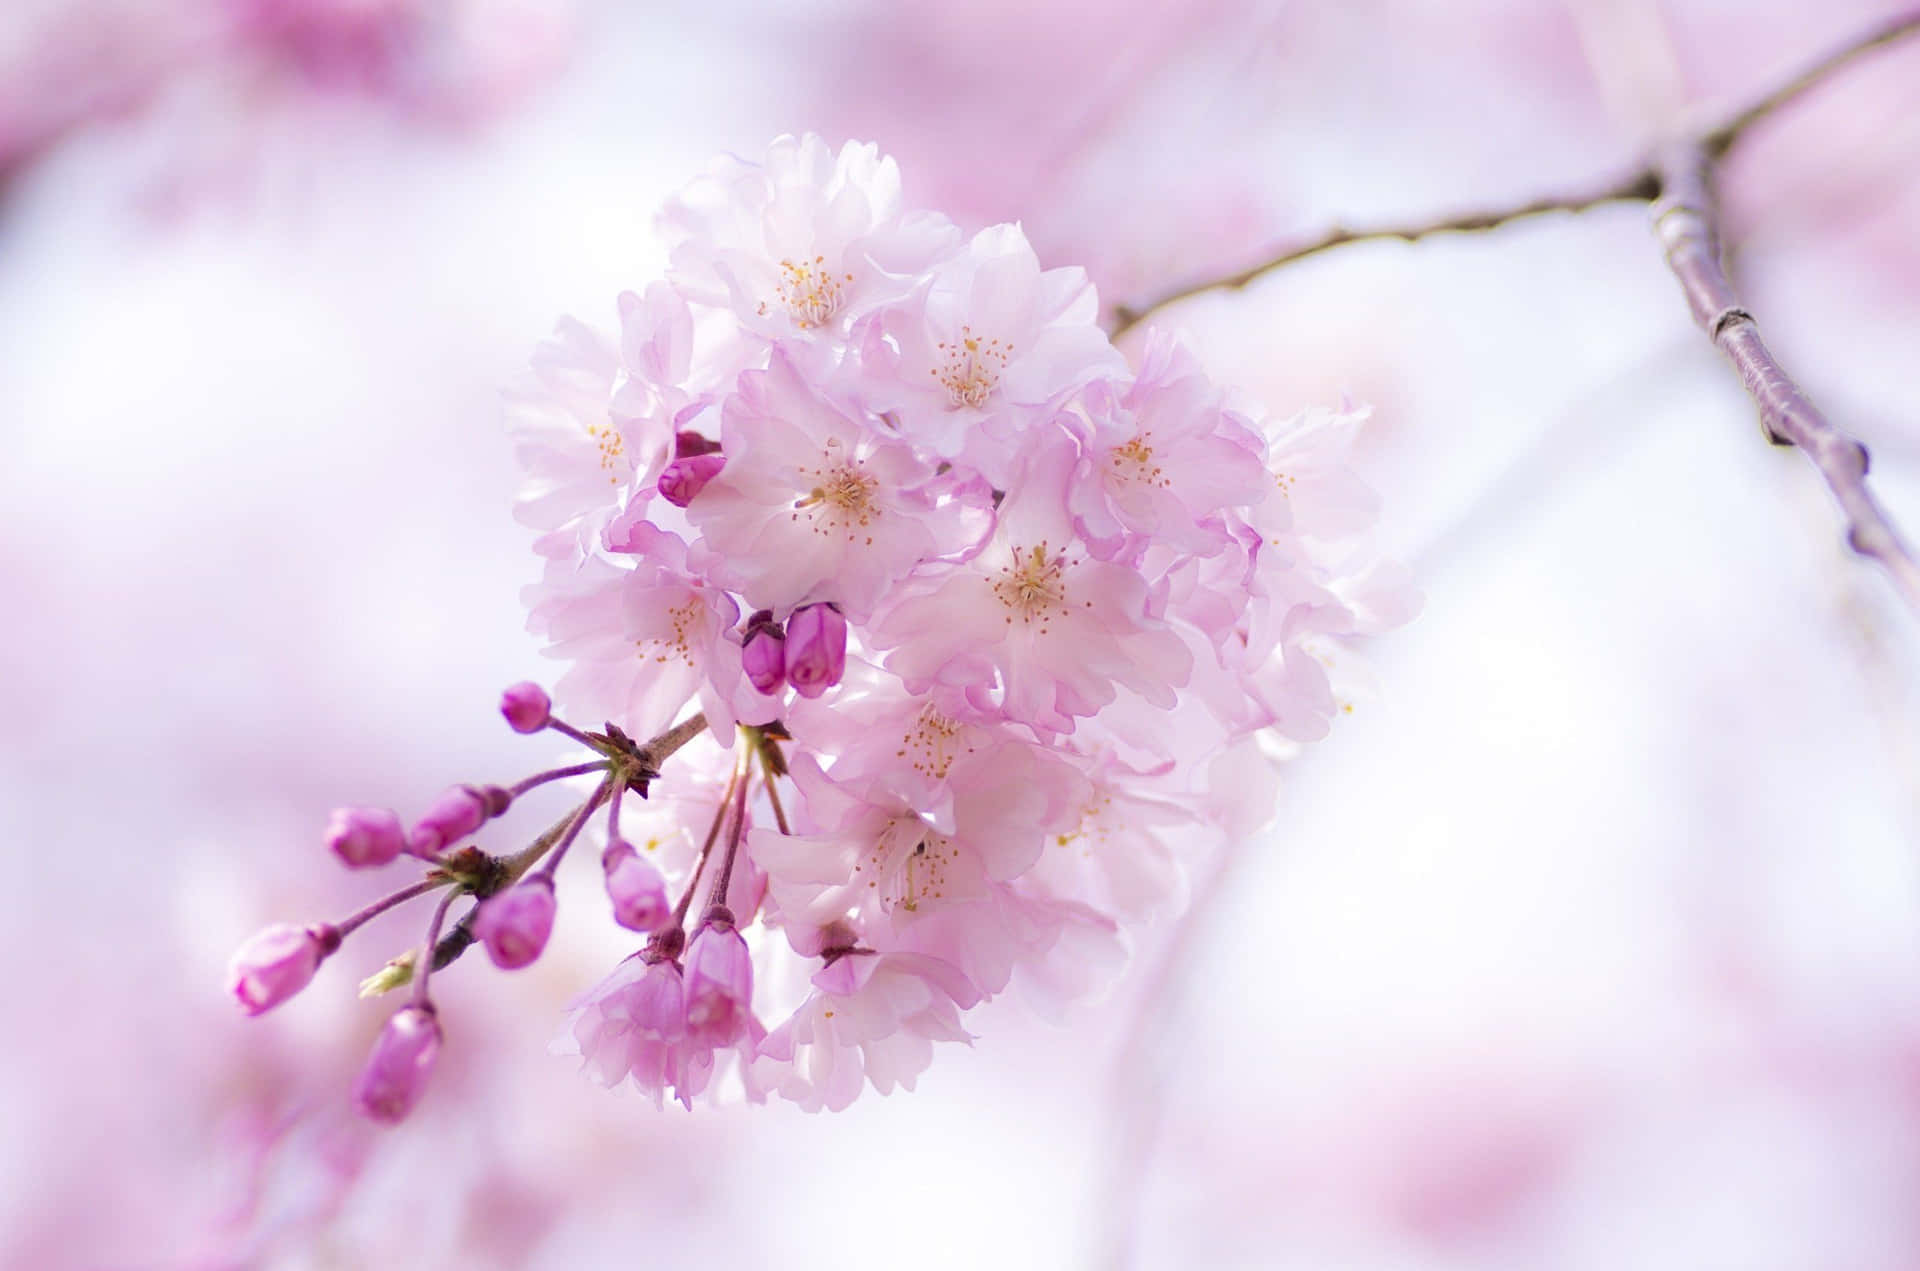 Caption: A Vibrant Spring Bloom Display Wallpaper